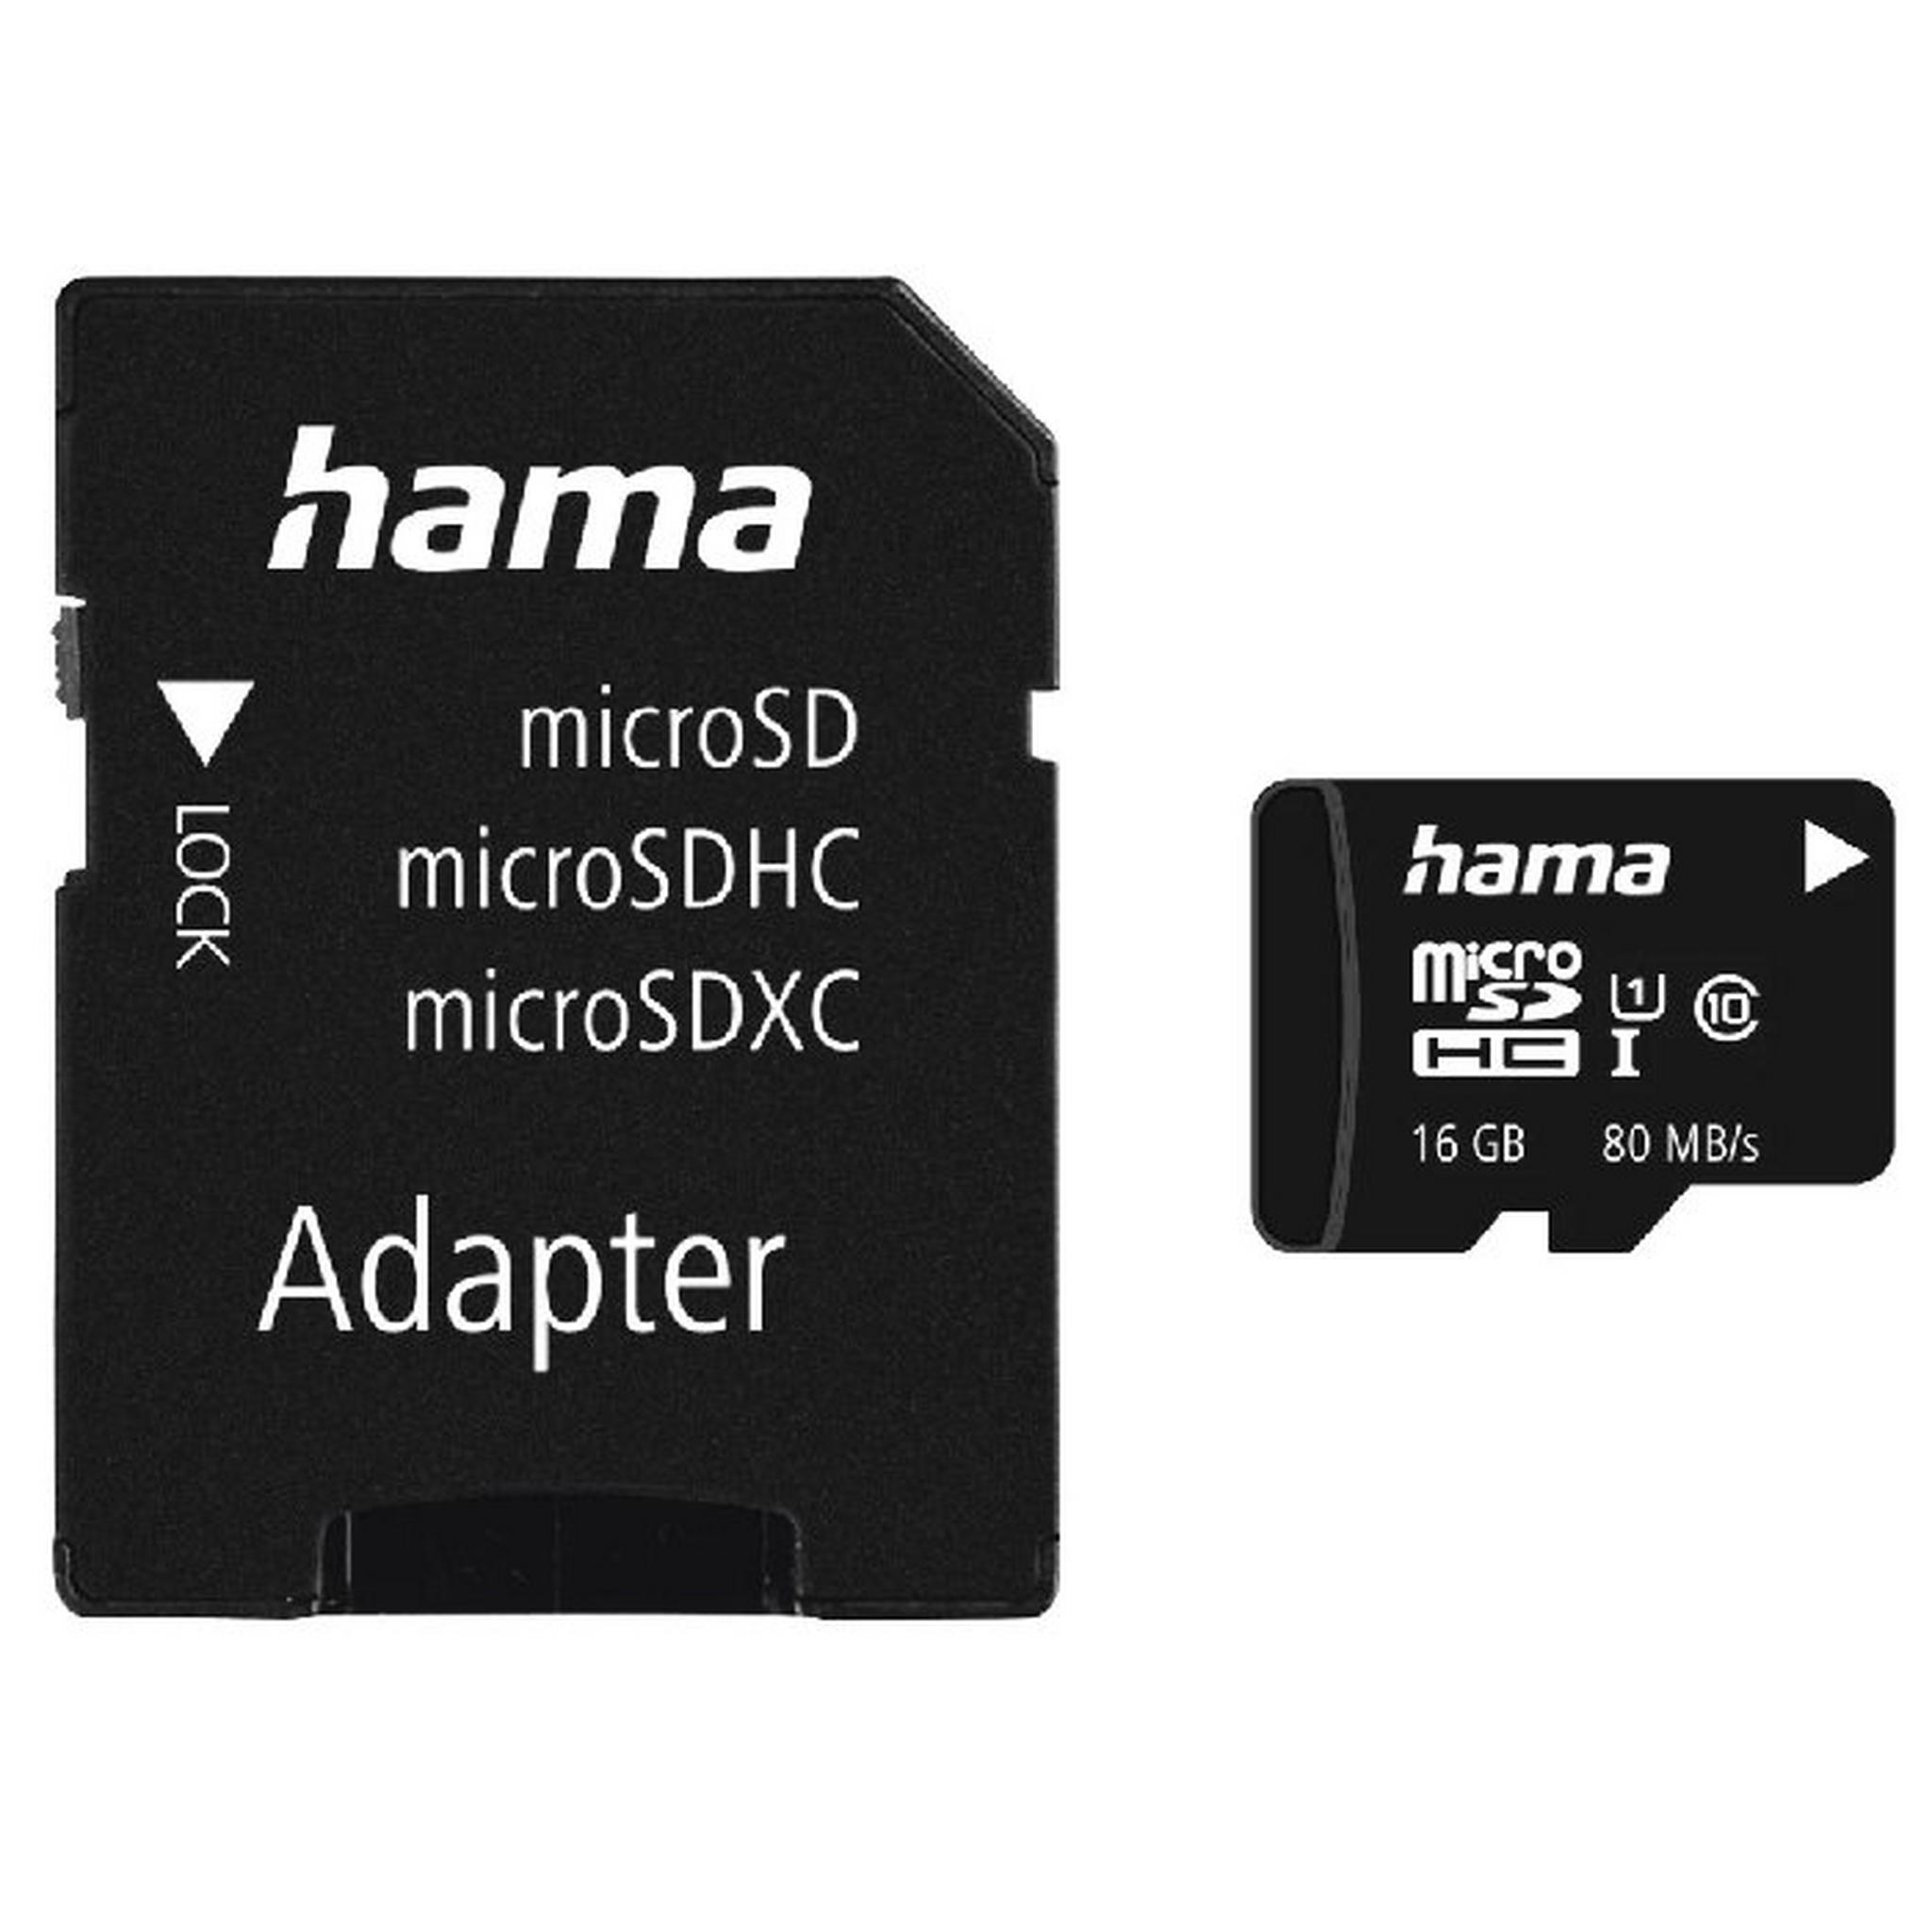 Hama microSDHC Memory Card Class 10 Uhs-i 80MB/s, 16 GB